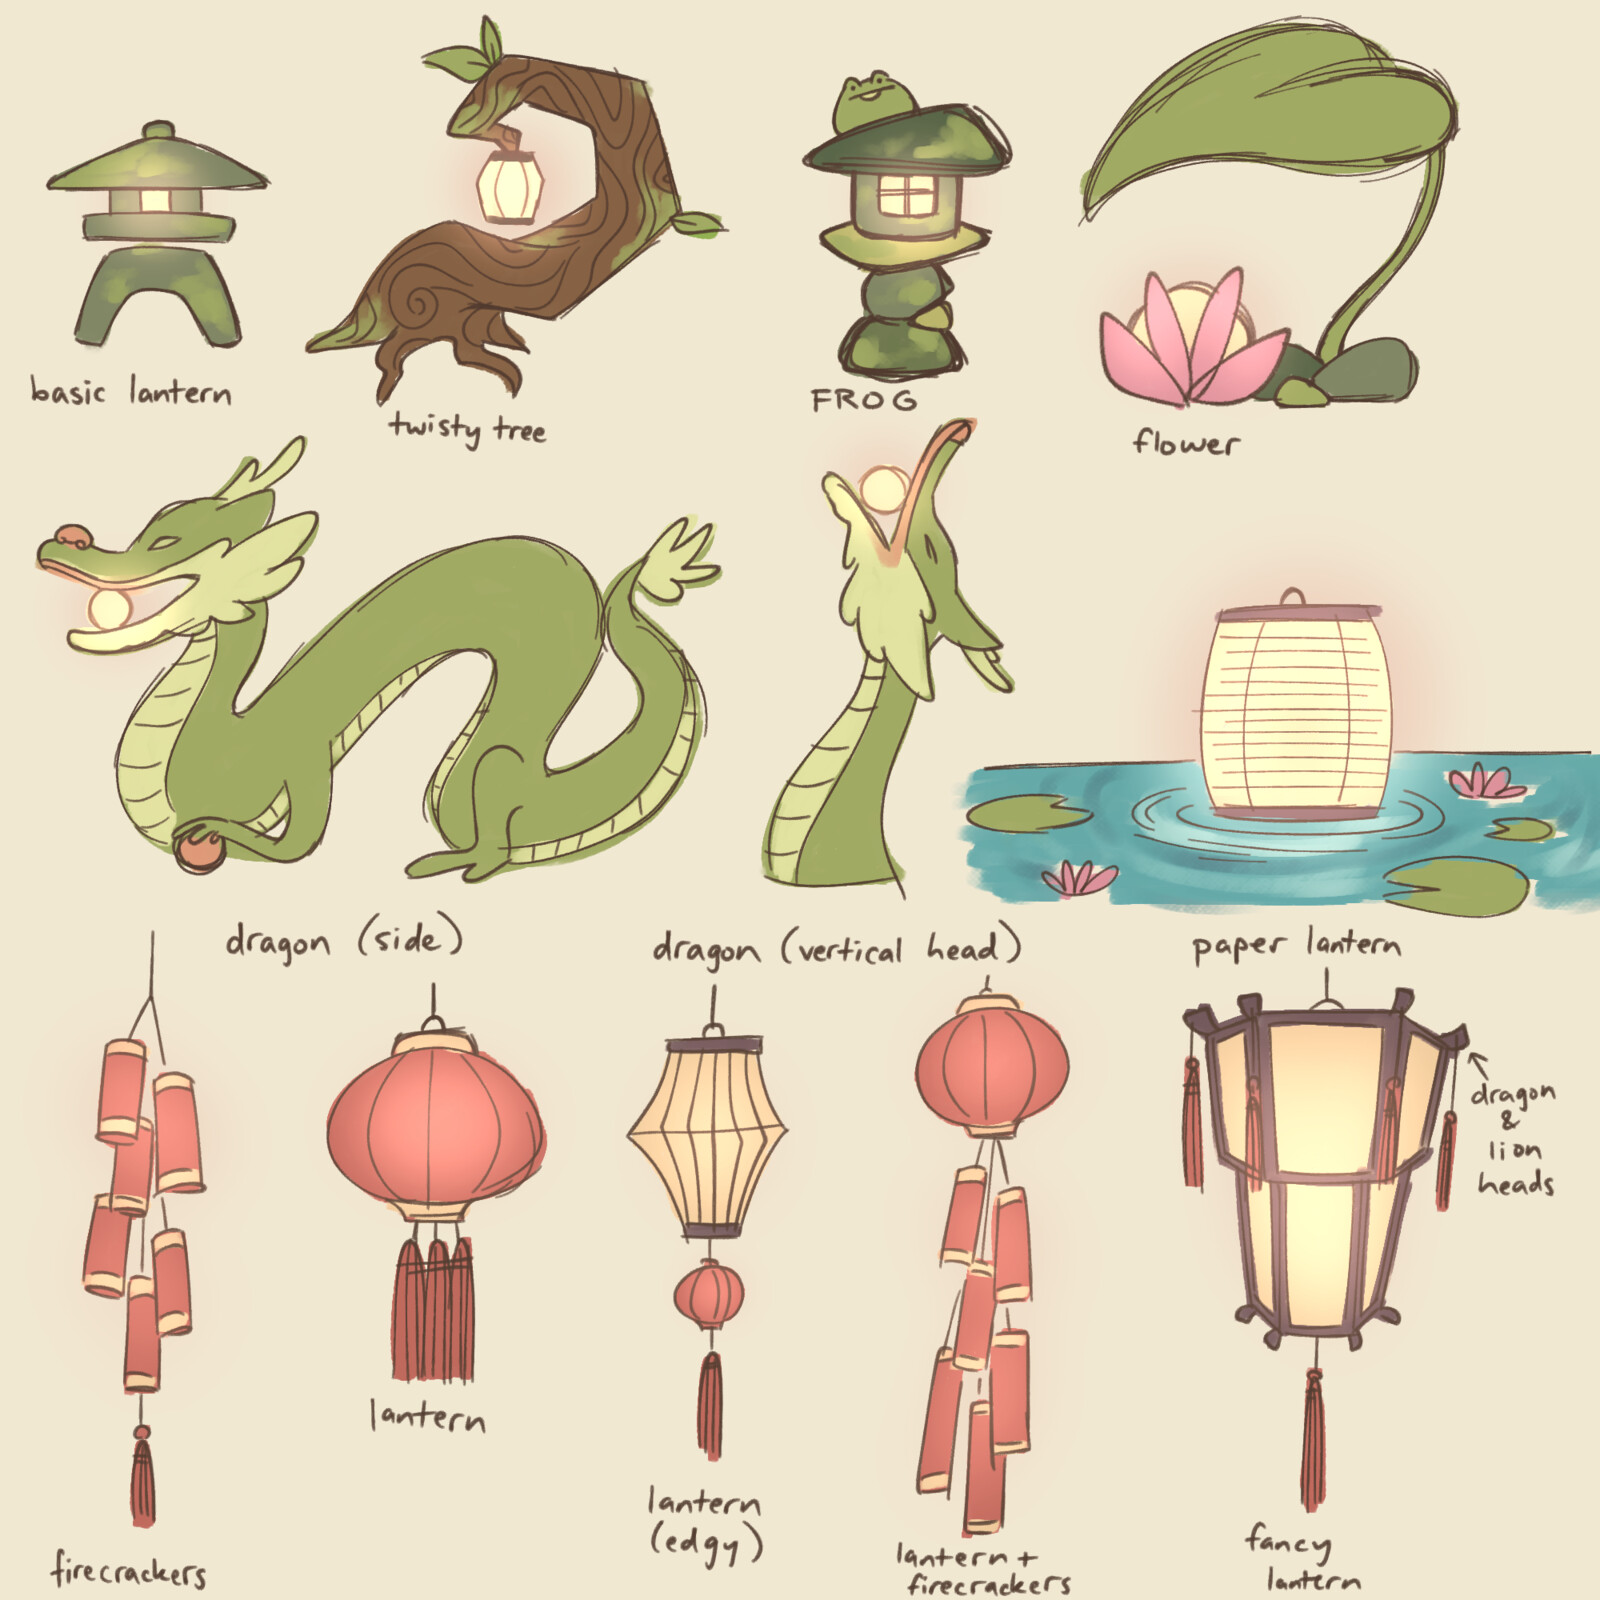 Lantern designs.